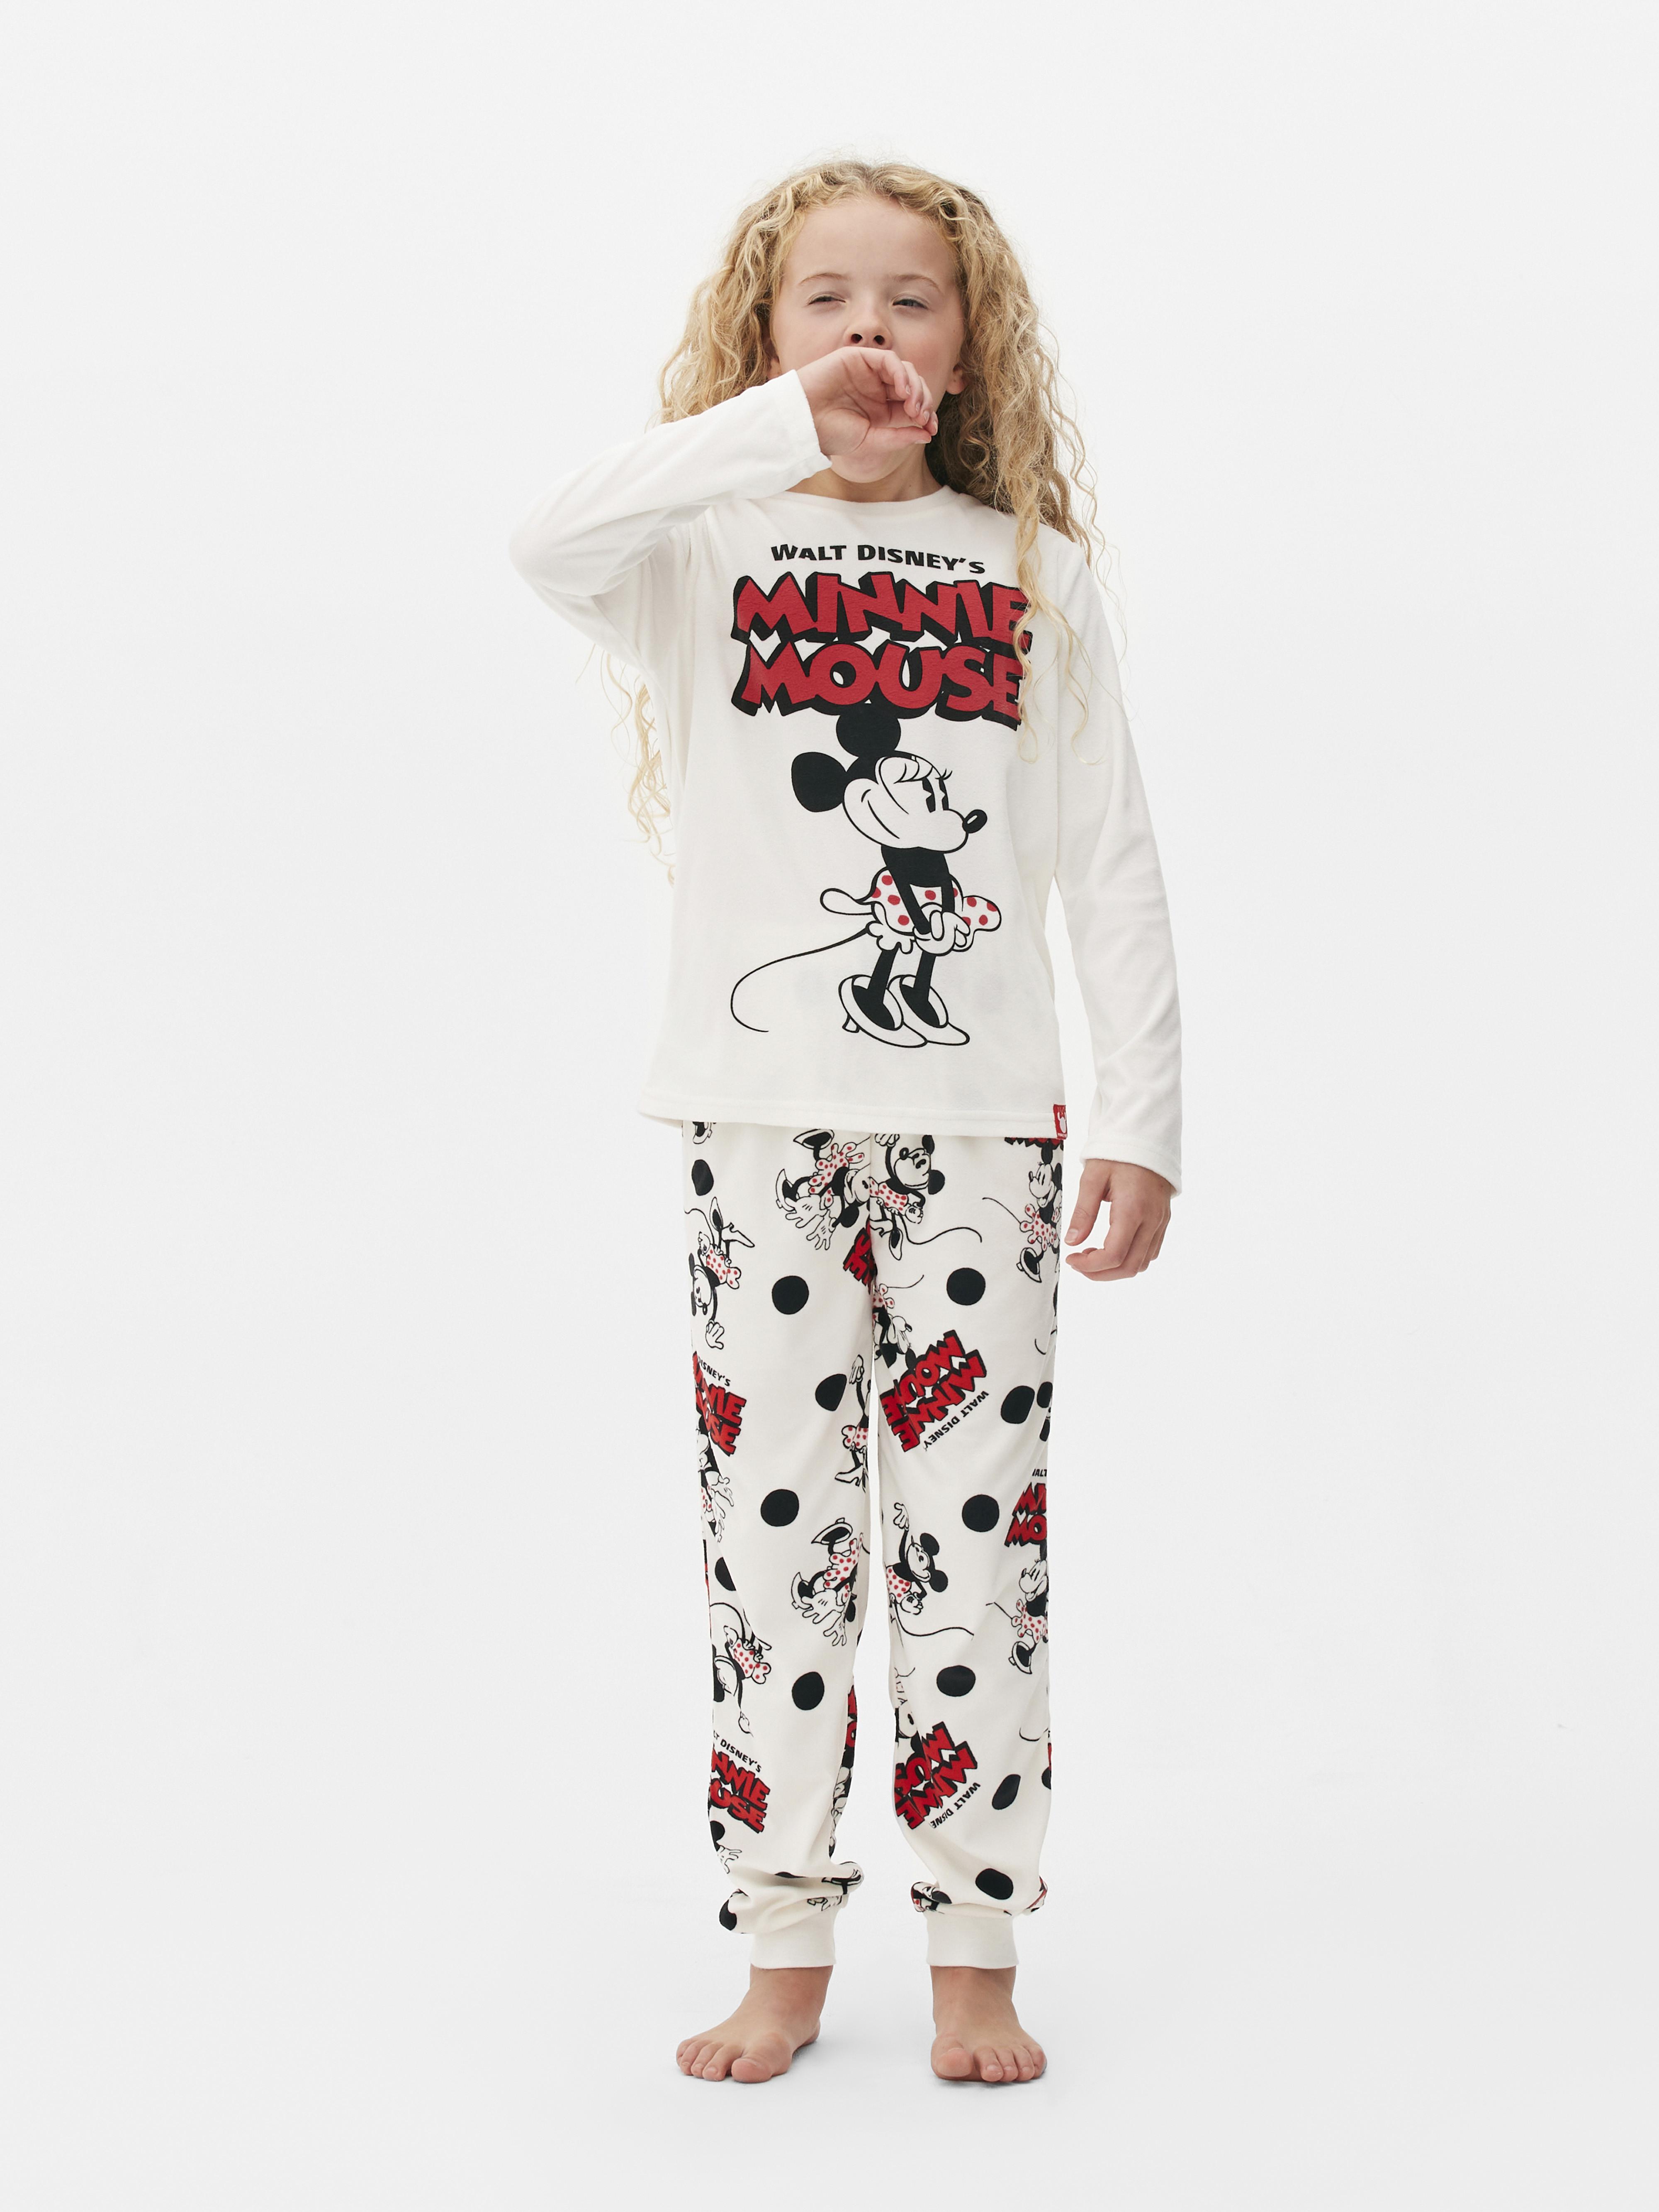 Onderscheiden milieu negatief Disney's Minnie Mouse Vintage Print Pyjama Set | Primark